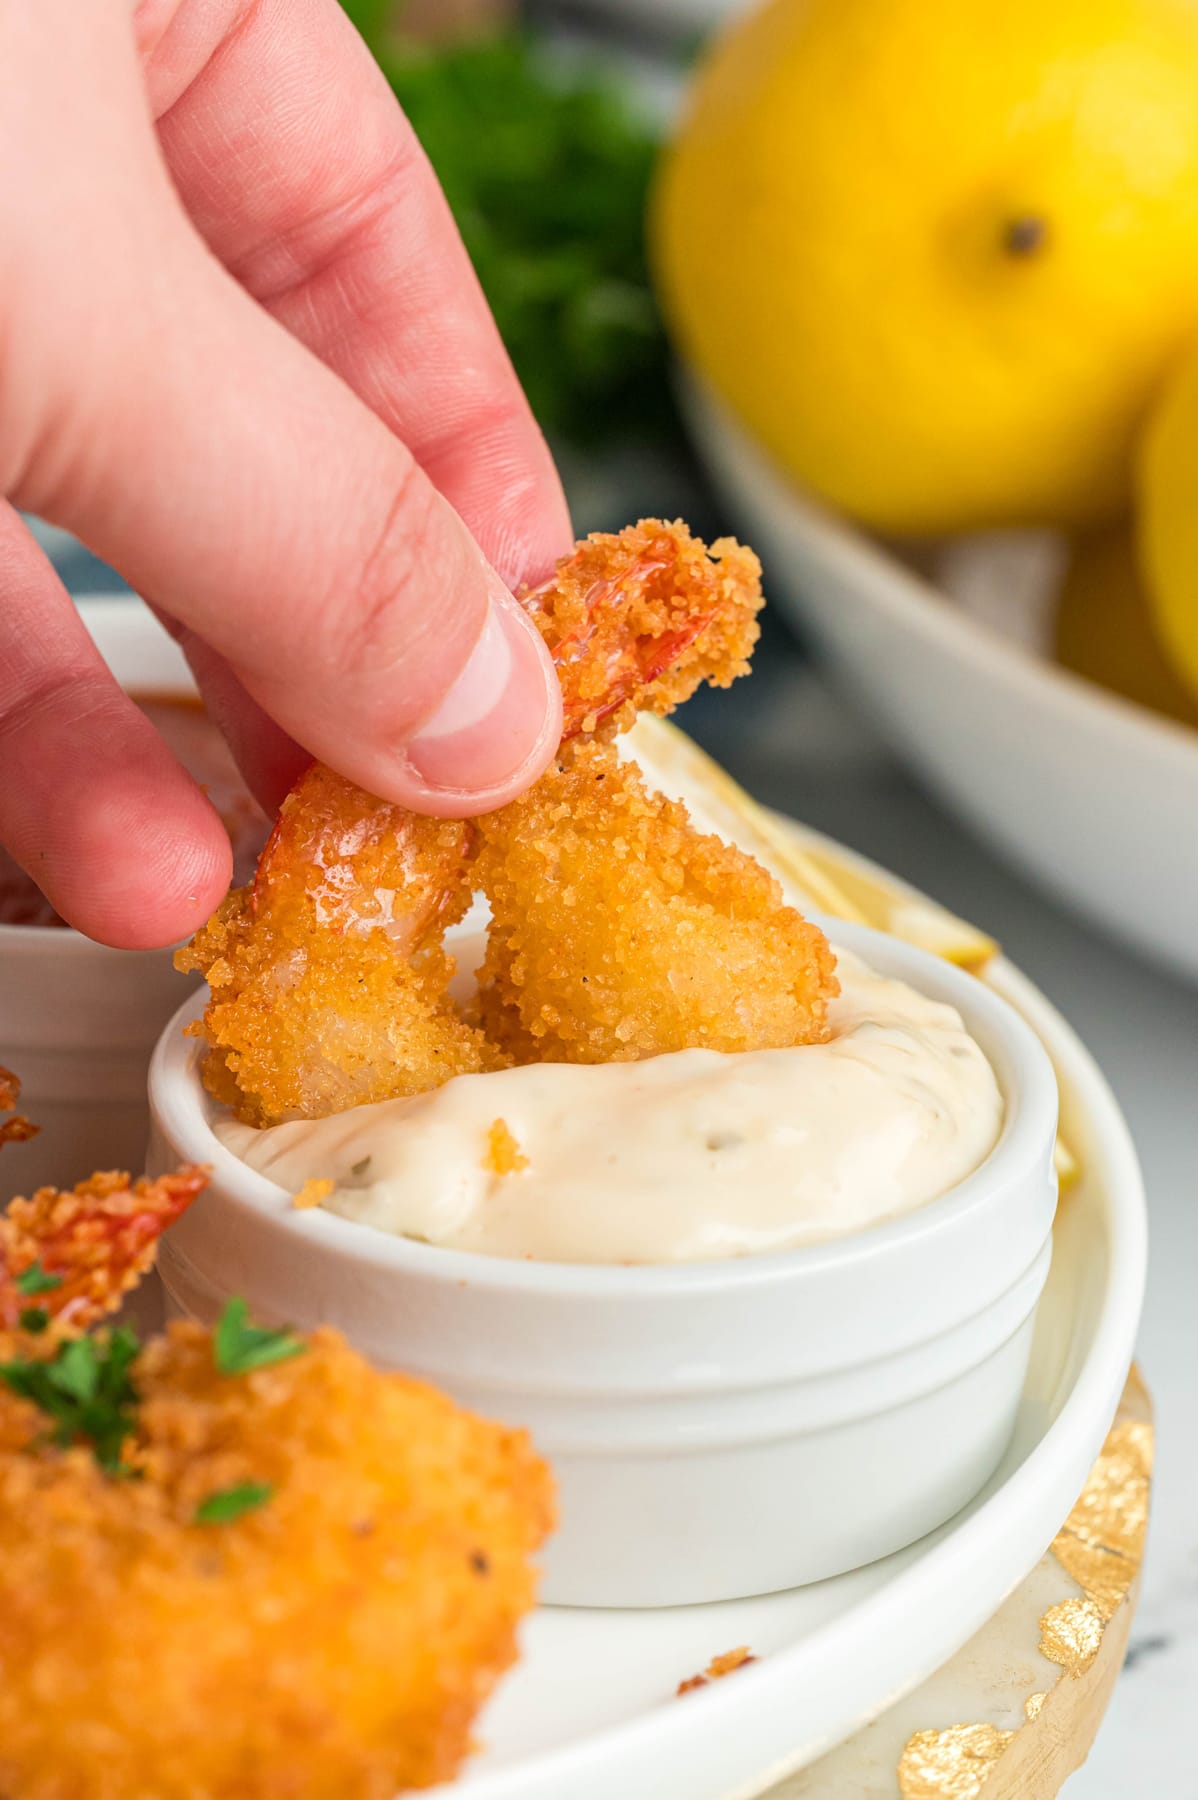 A hand dipping a fried shrimp into tartar sauce